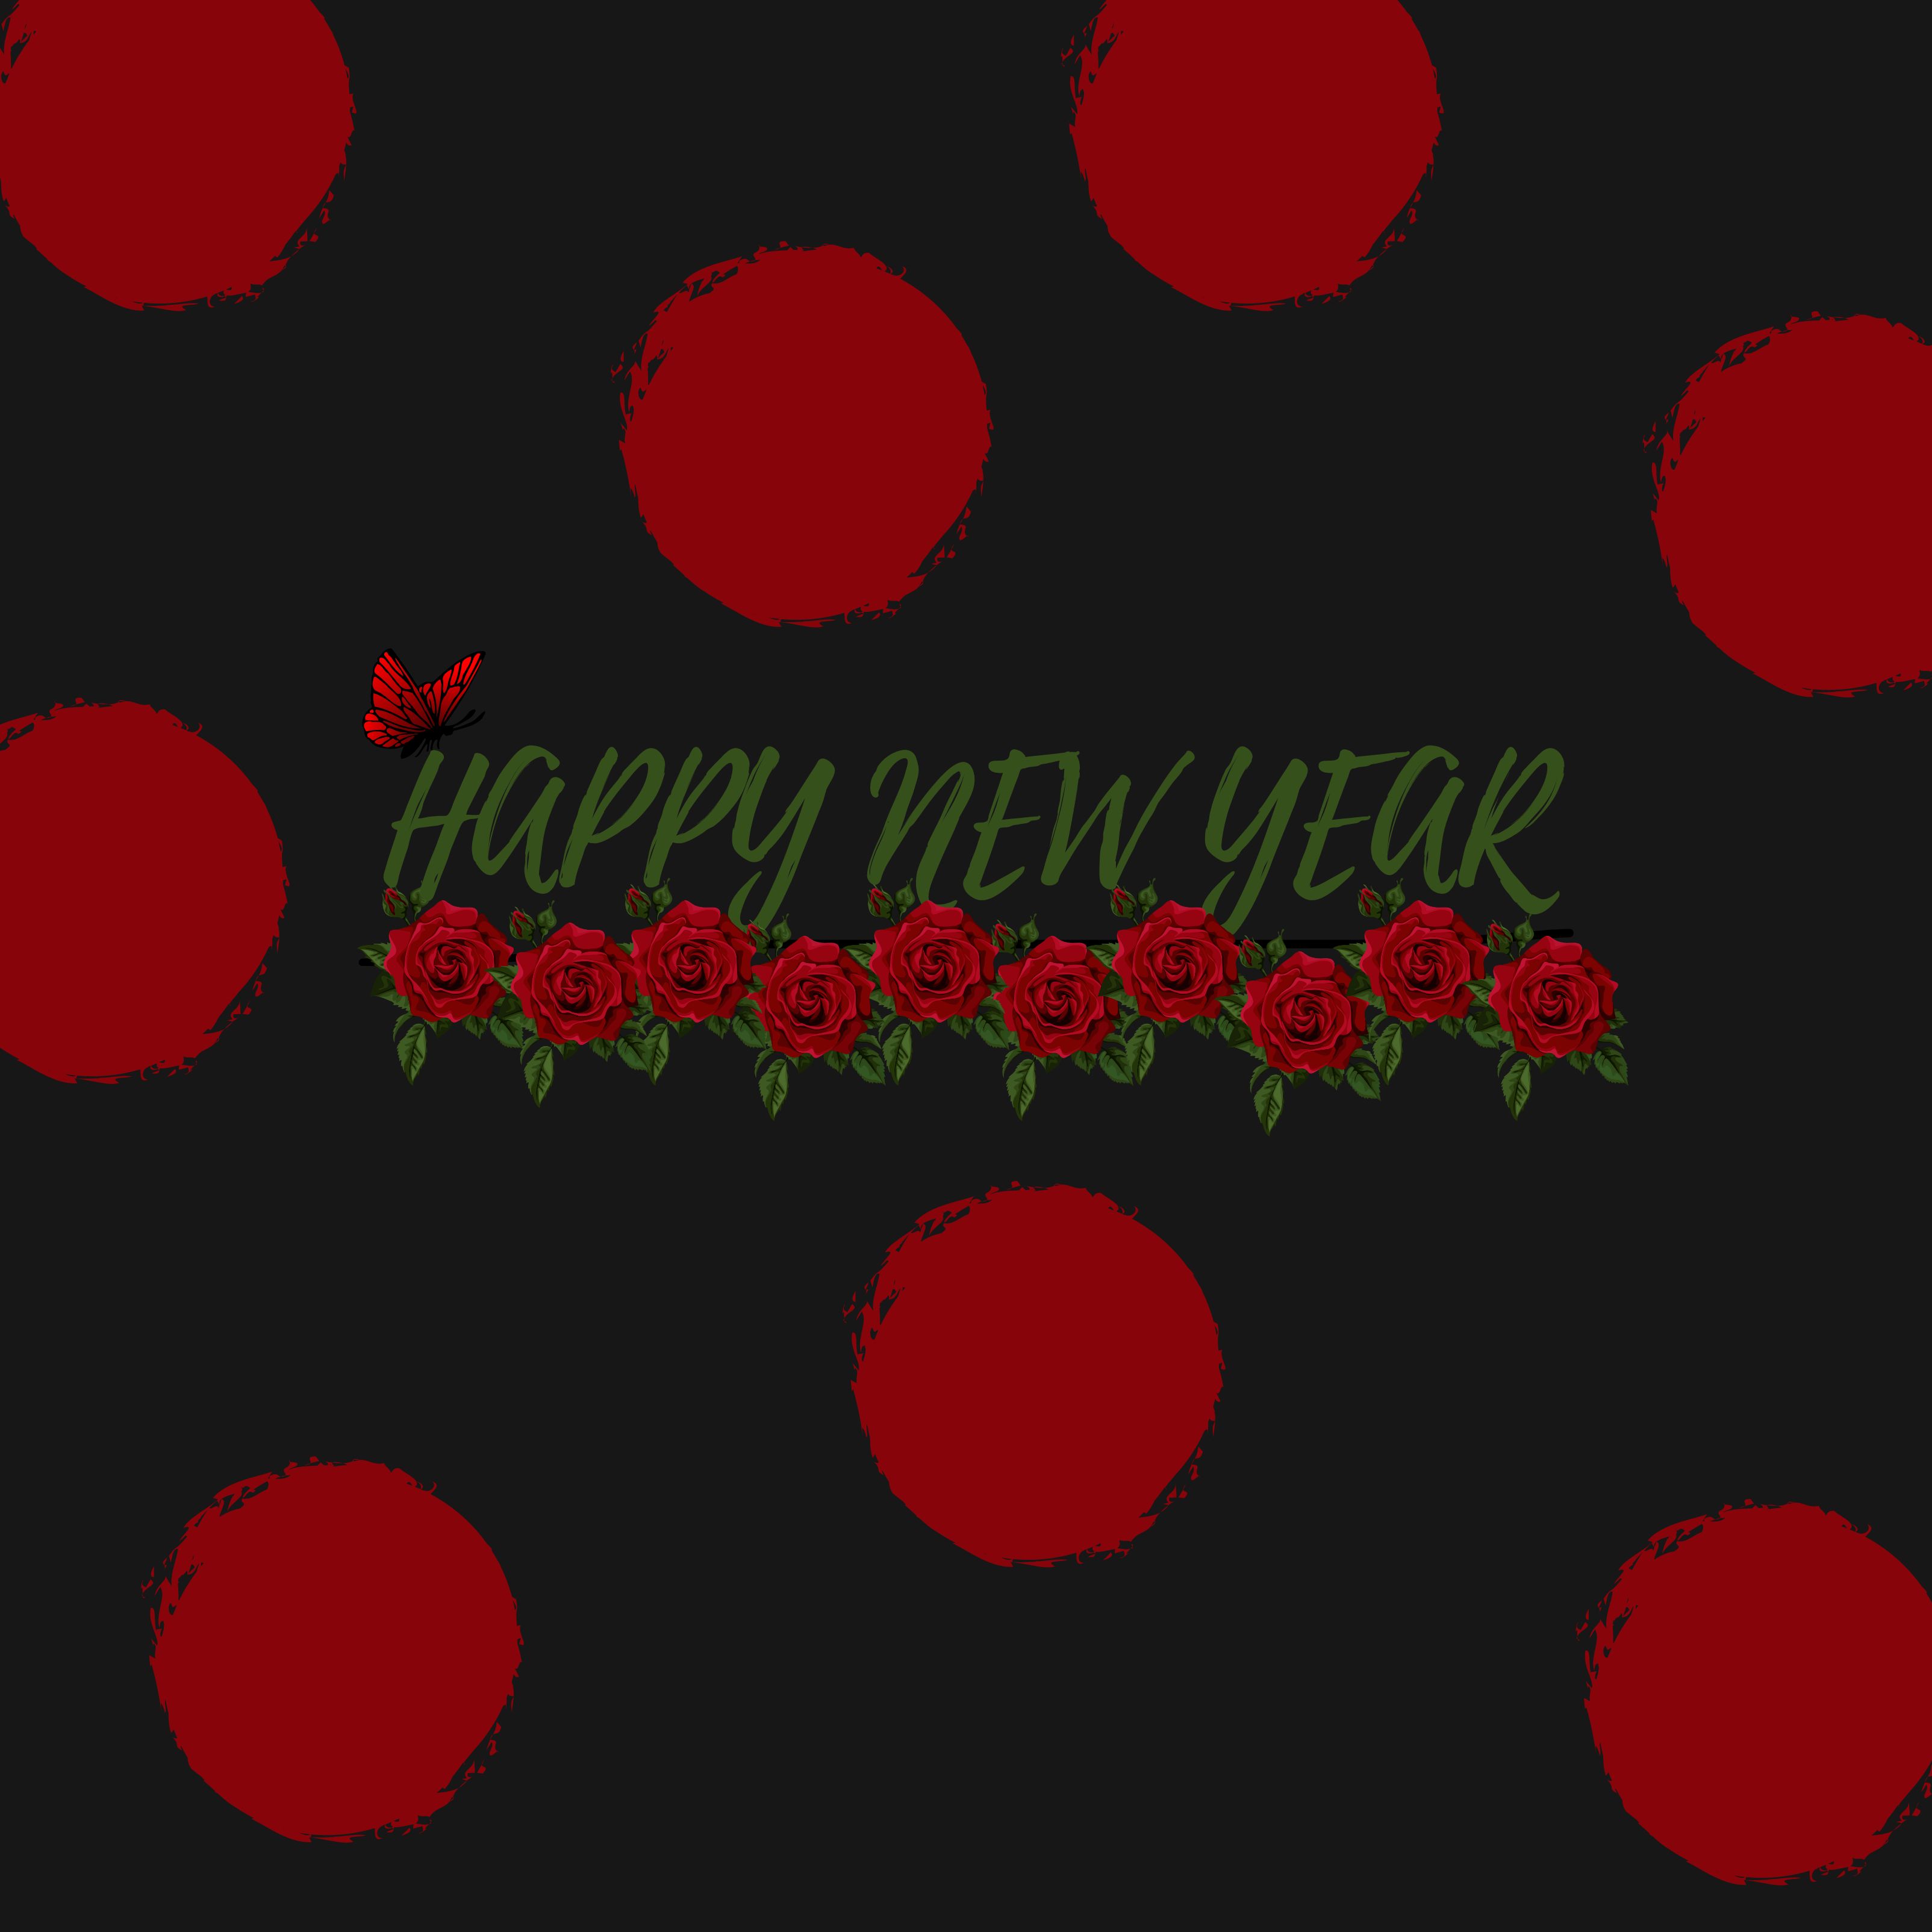 iPad Wallpapers Red Poka Dot New Year Ipad Wallpaper 3208x3208 px